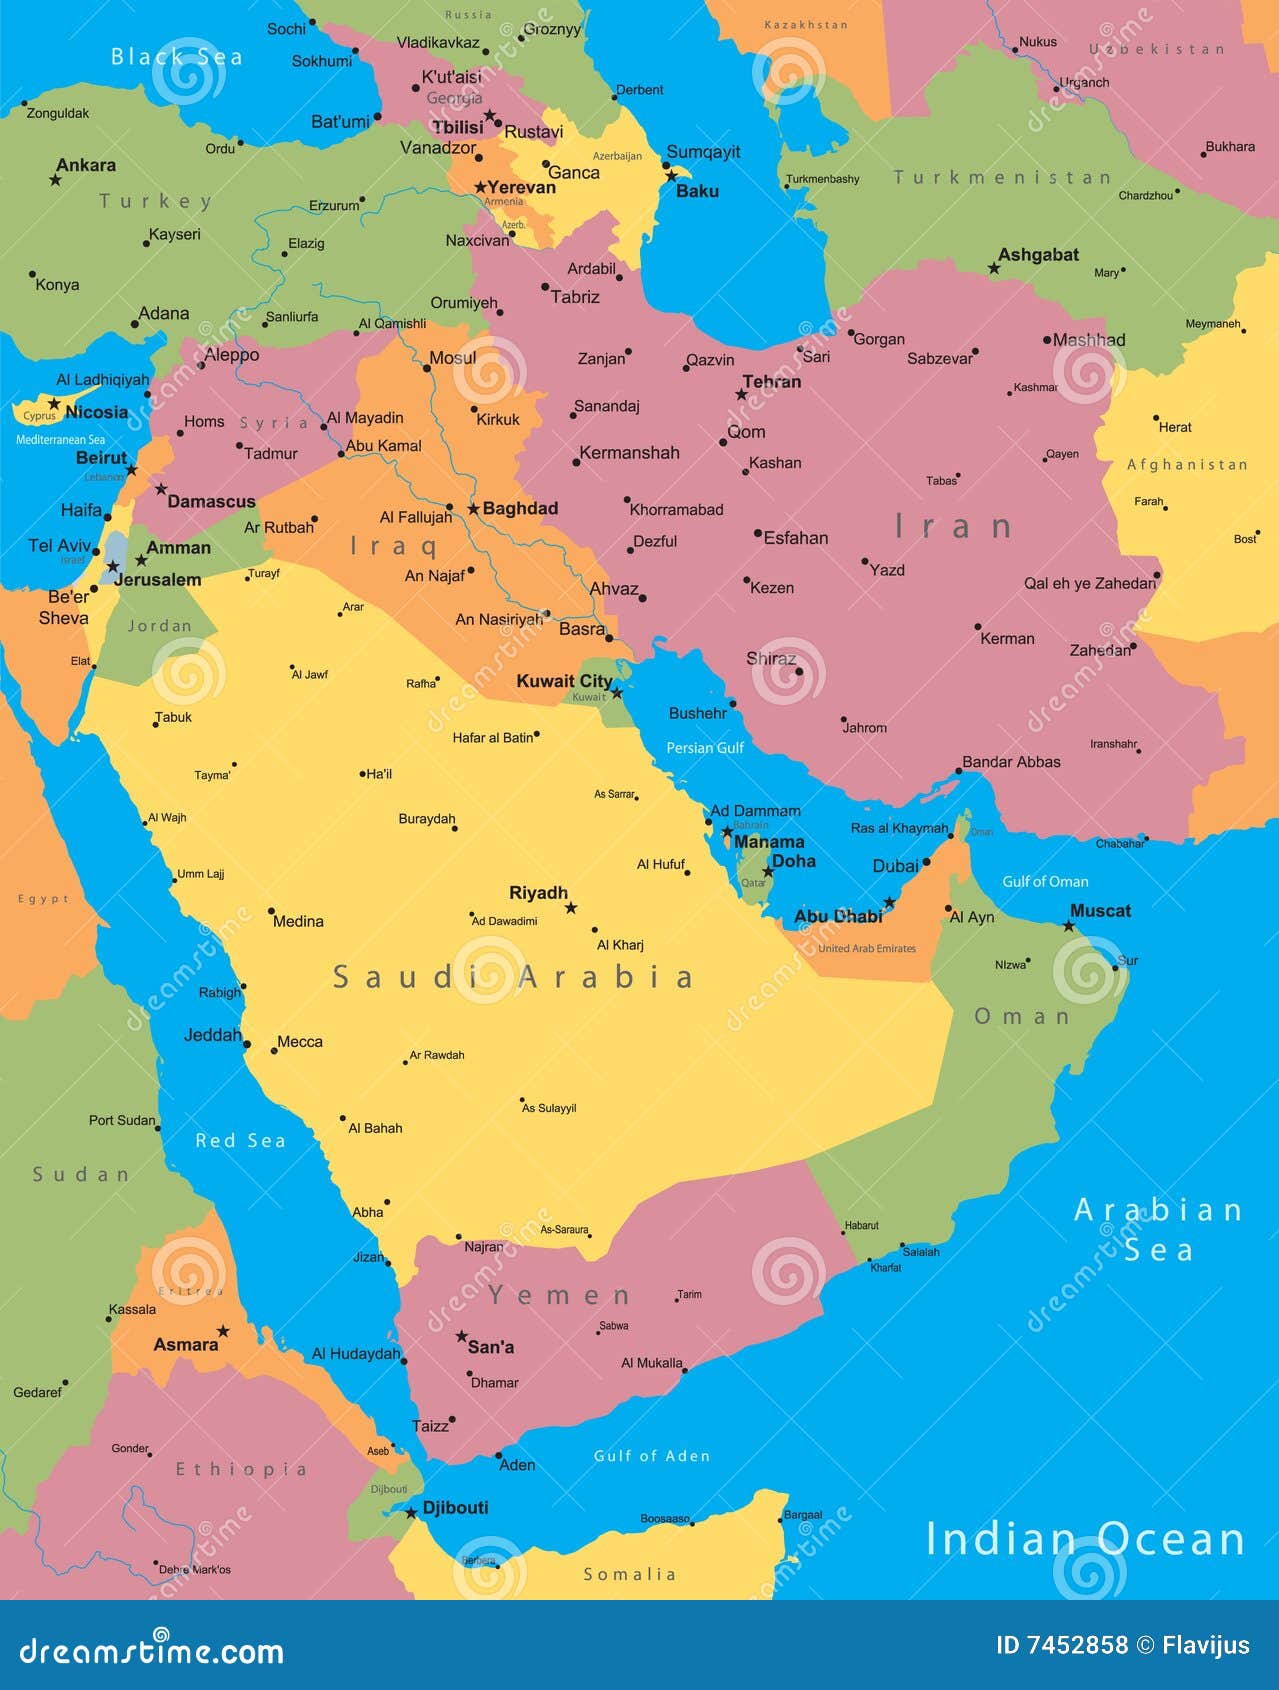 kuvajt mapa Middle East map stock vector. Illustration of geography   7452858 kuvajt mapa